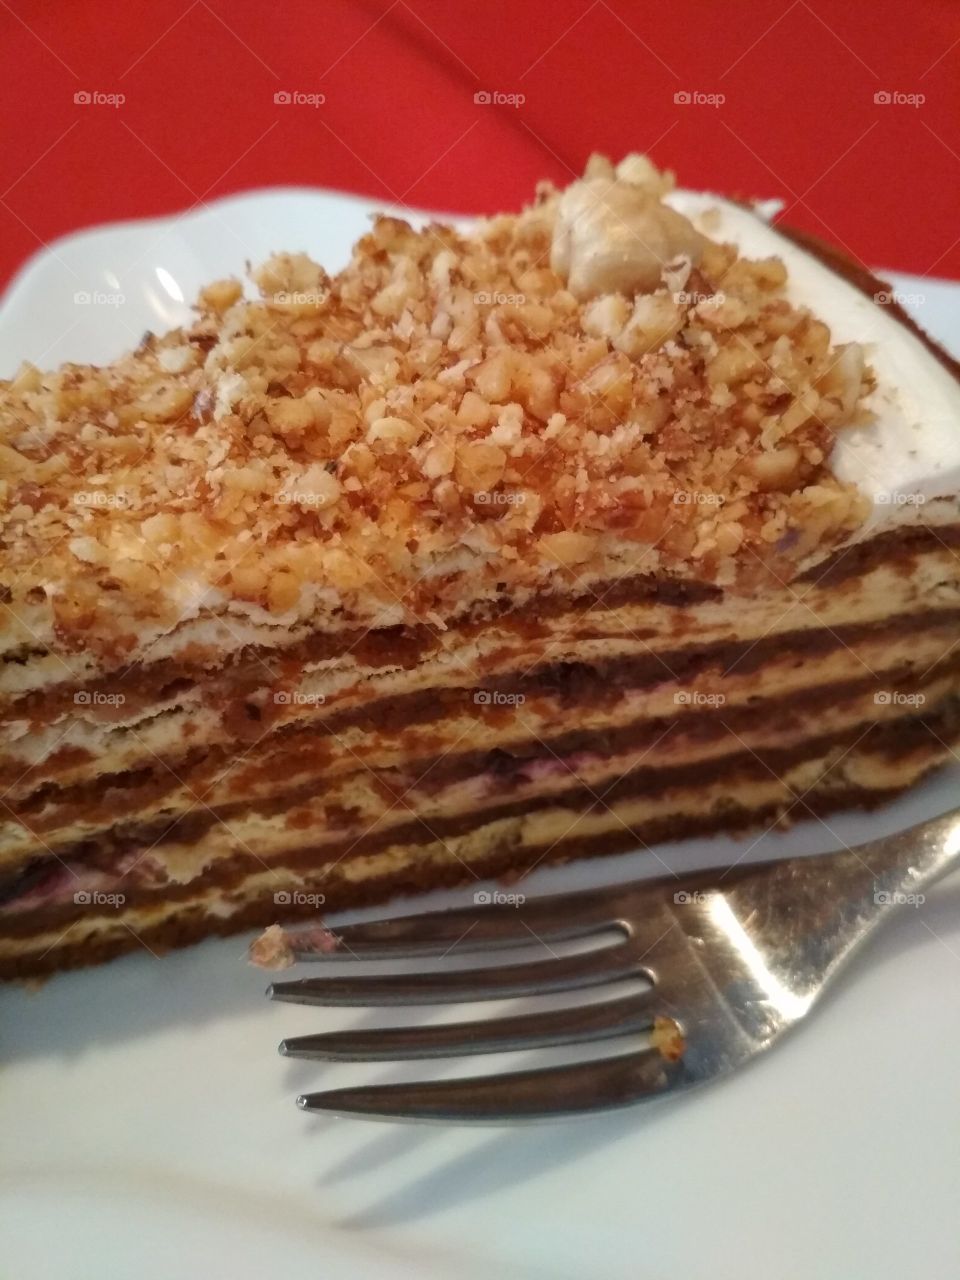 Cake in a dish